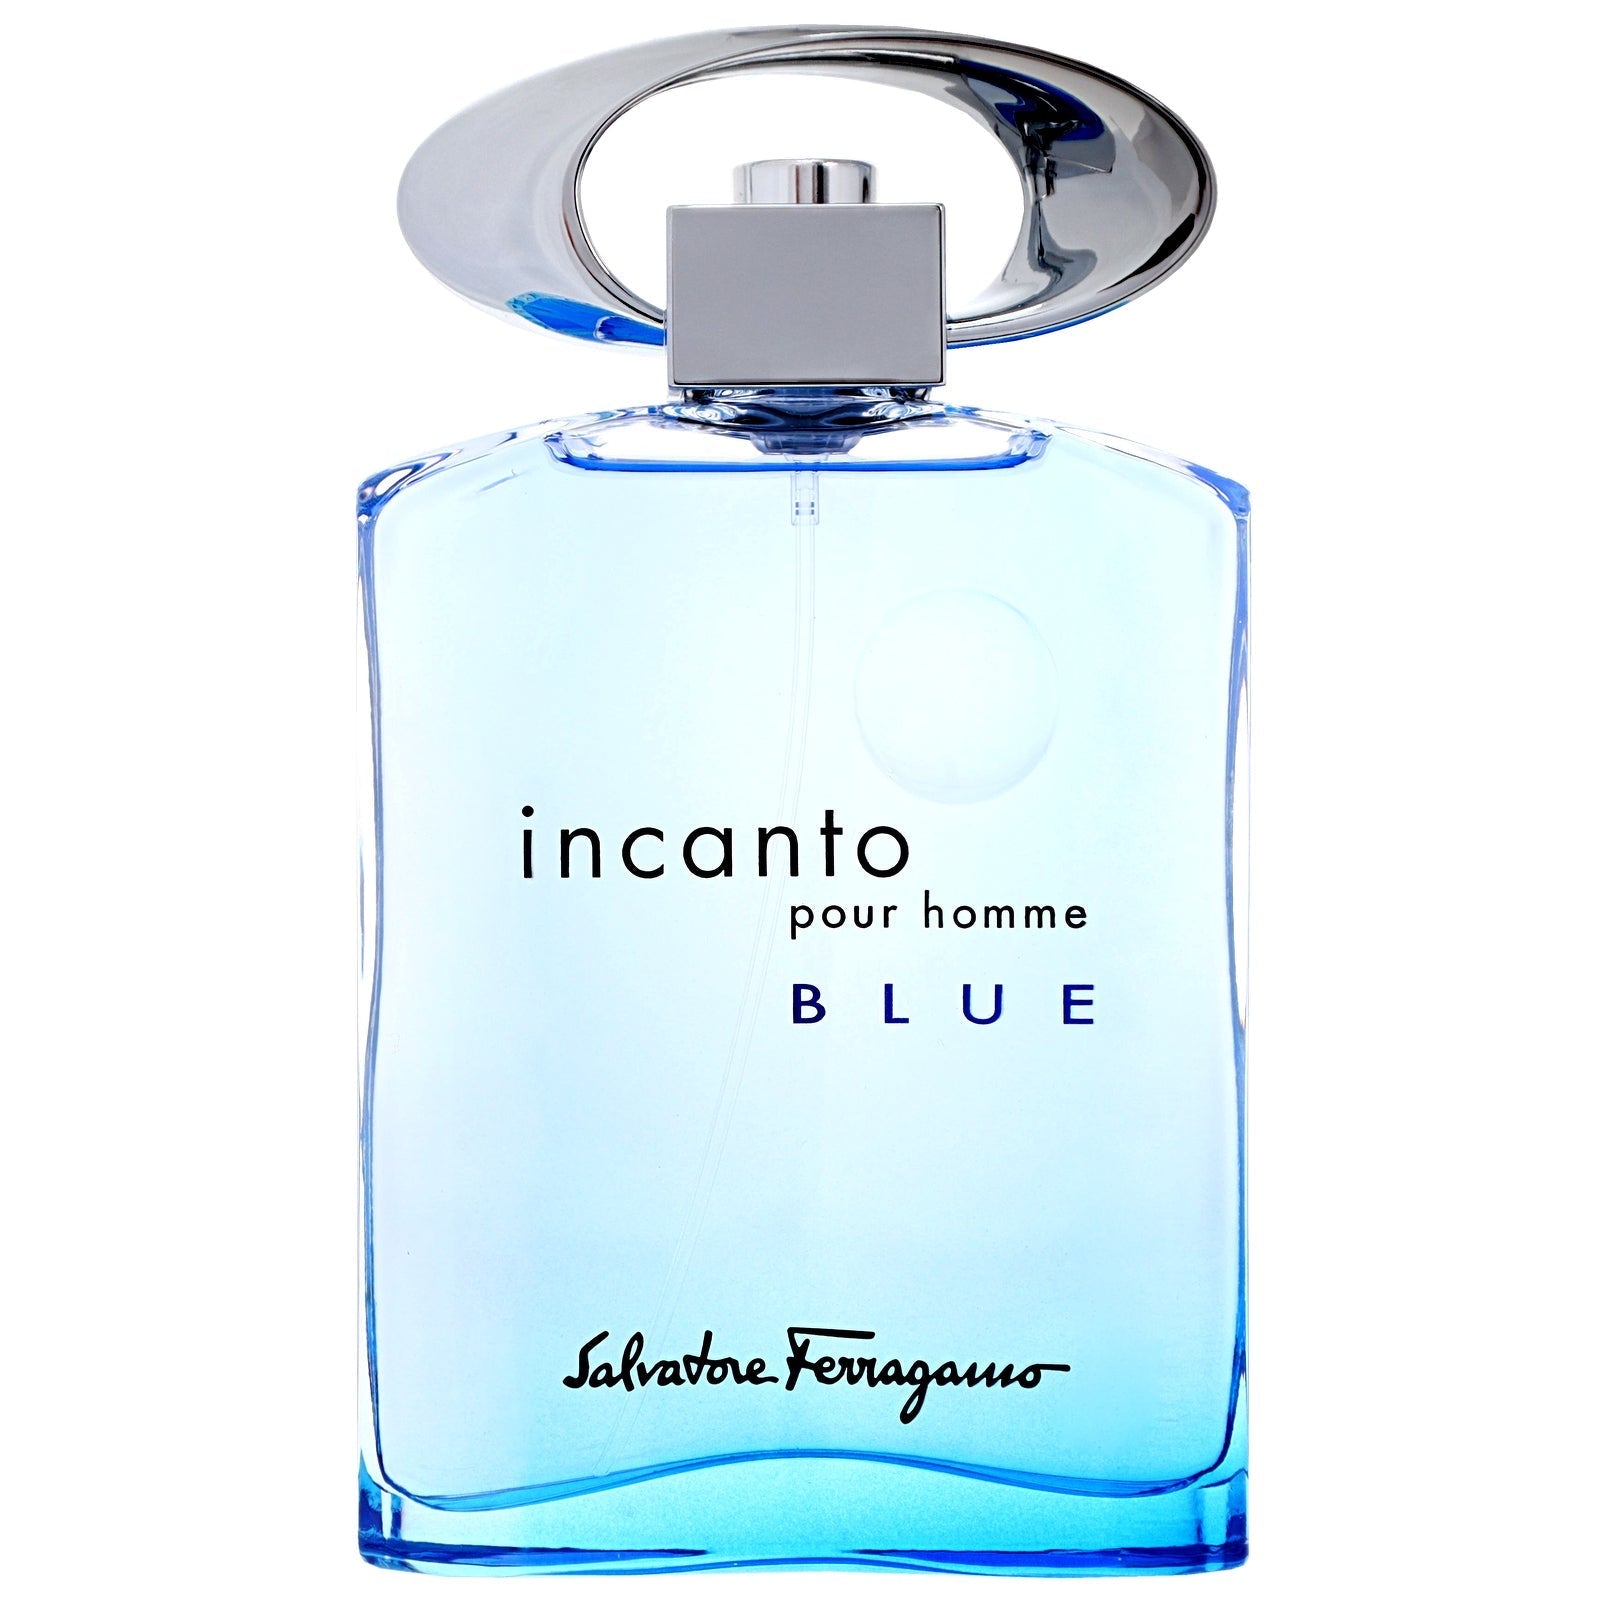 Salvatore Ferragamo Incanto Blue Eau de Toilette 100ml - Feel Gorgeous